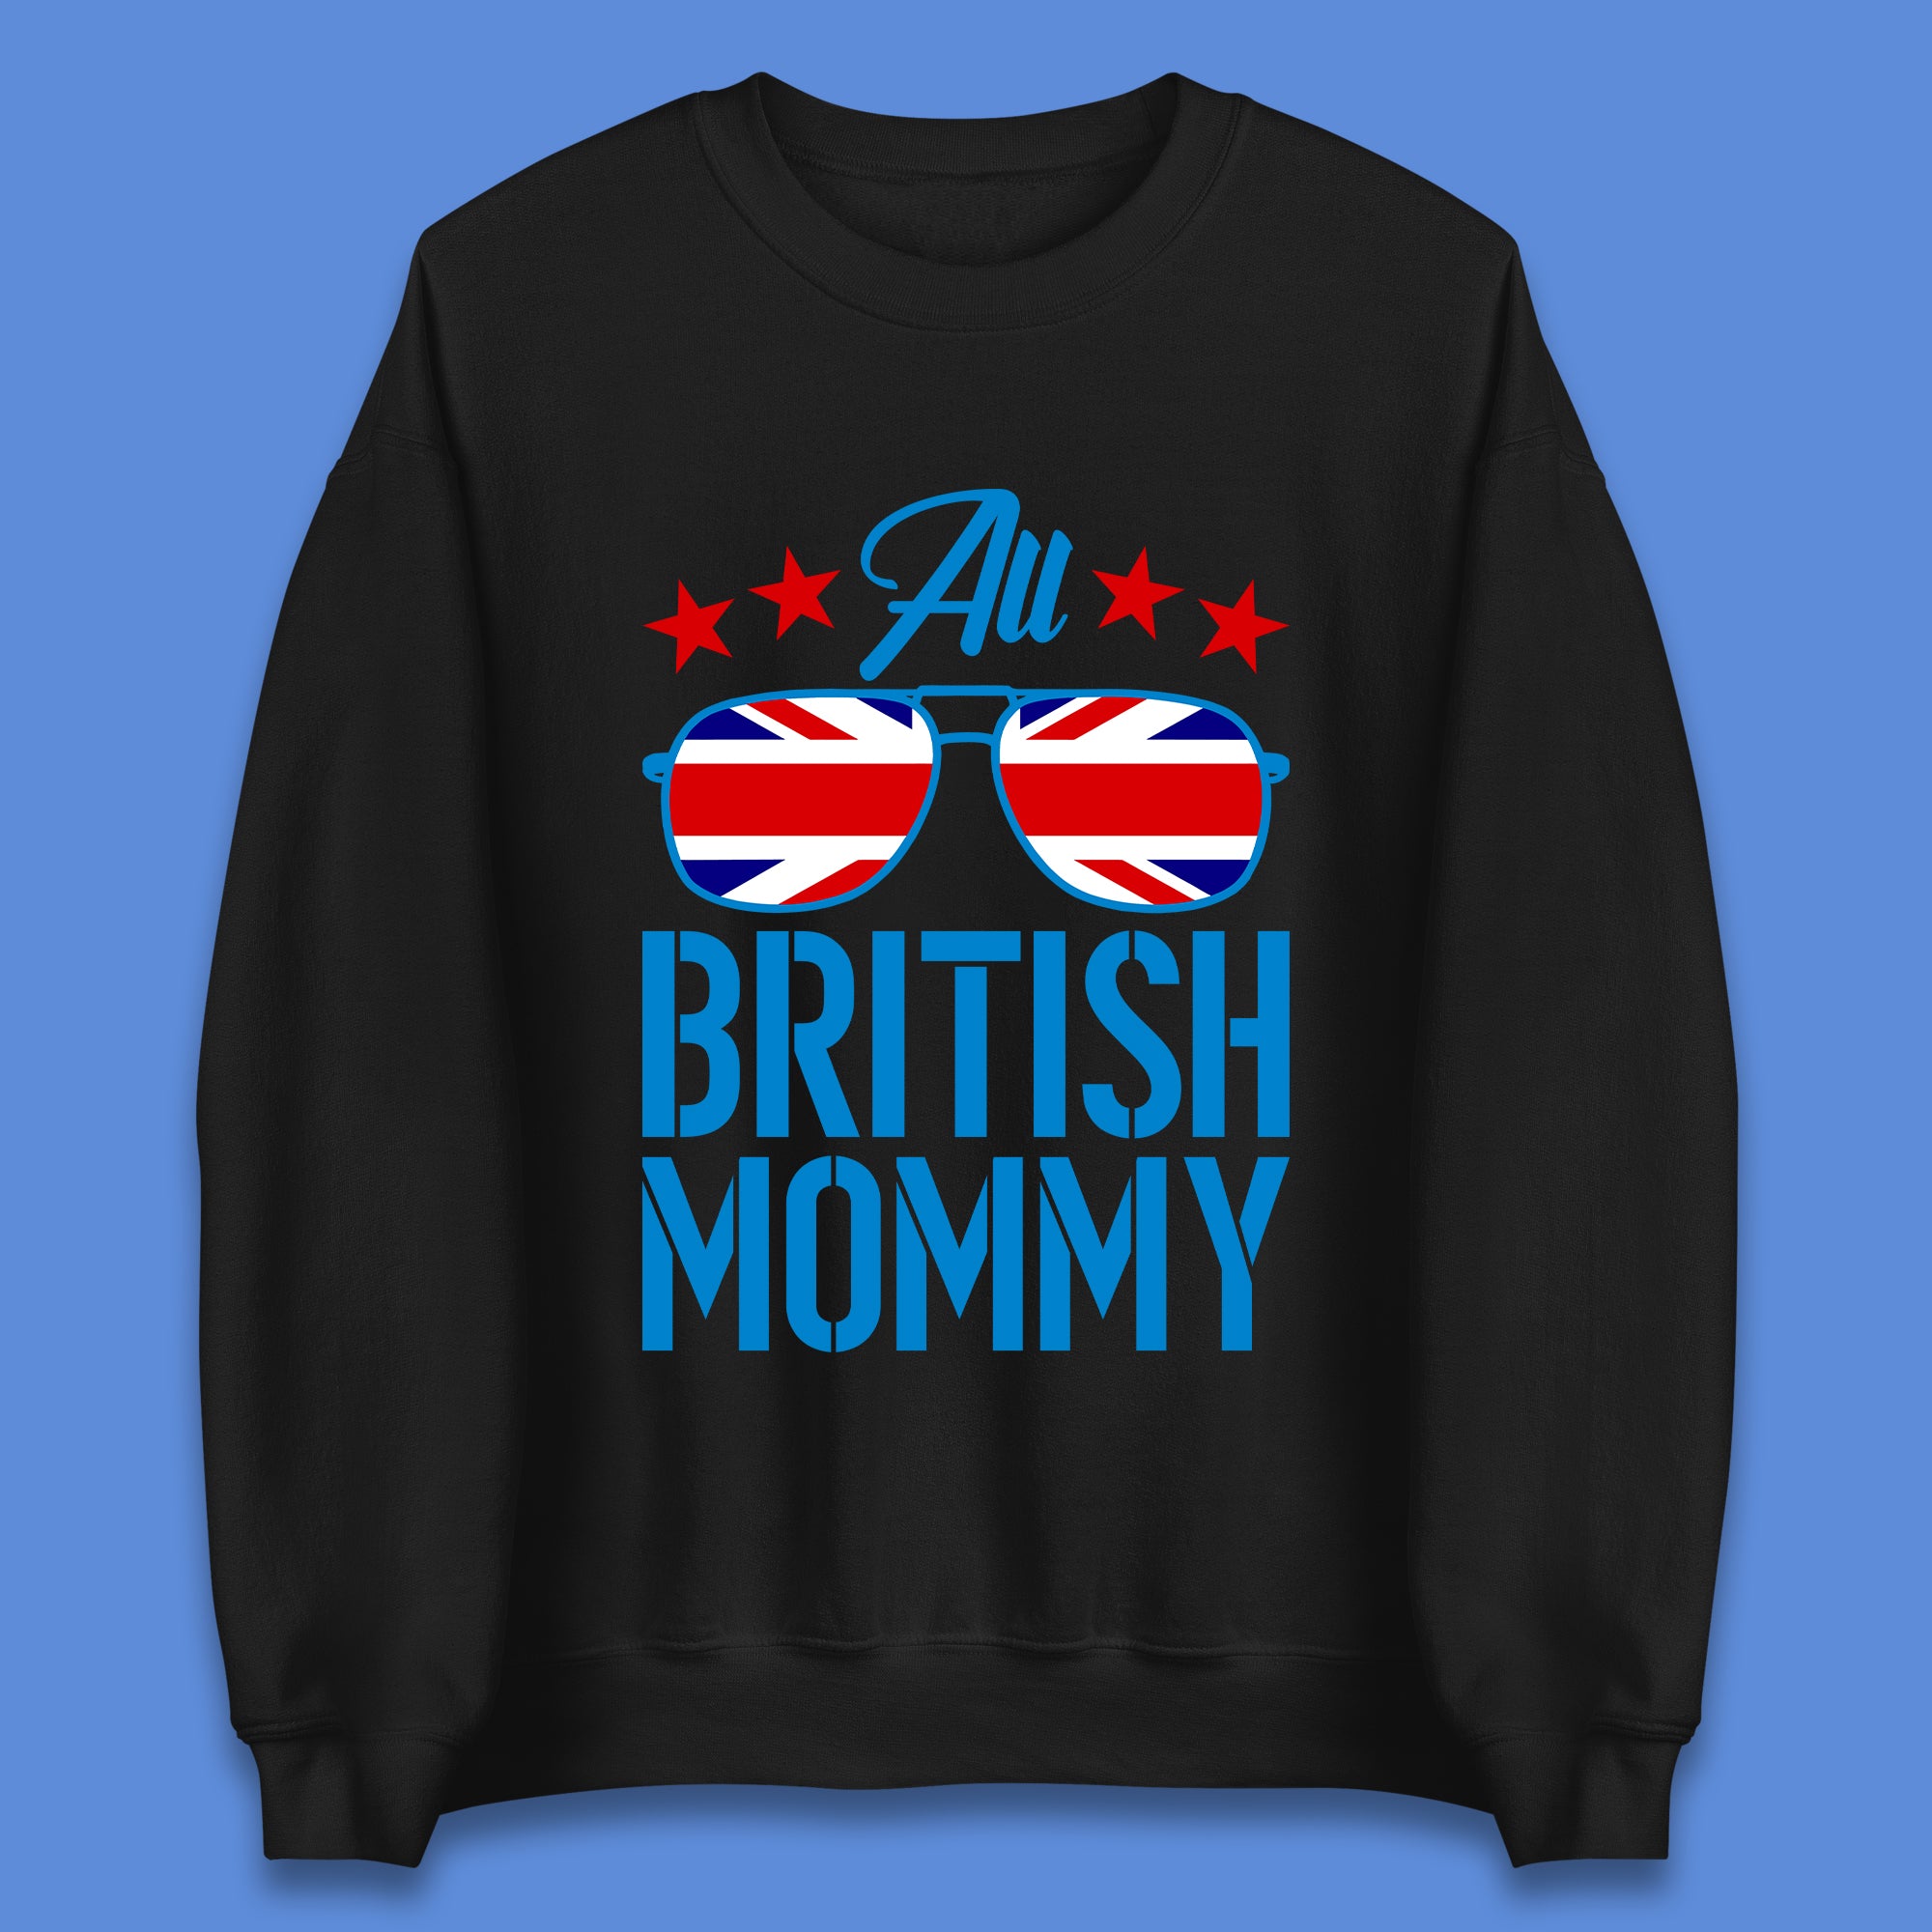 British Mommy Unisex Sweatshirt